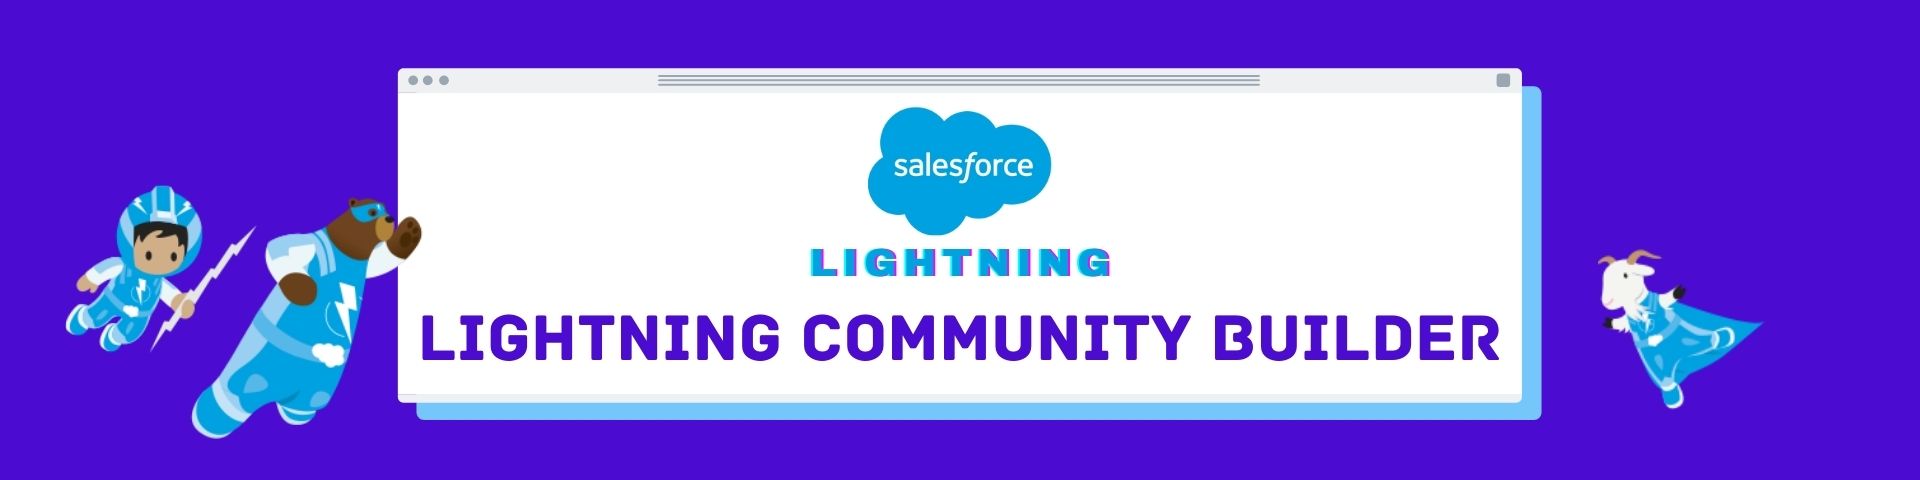 Salesforce Lightning Community builder